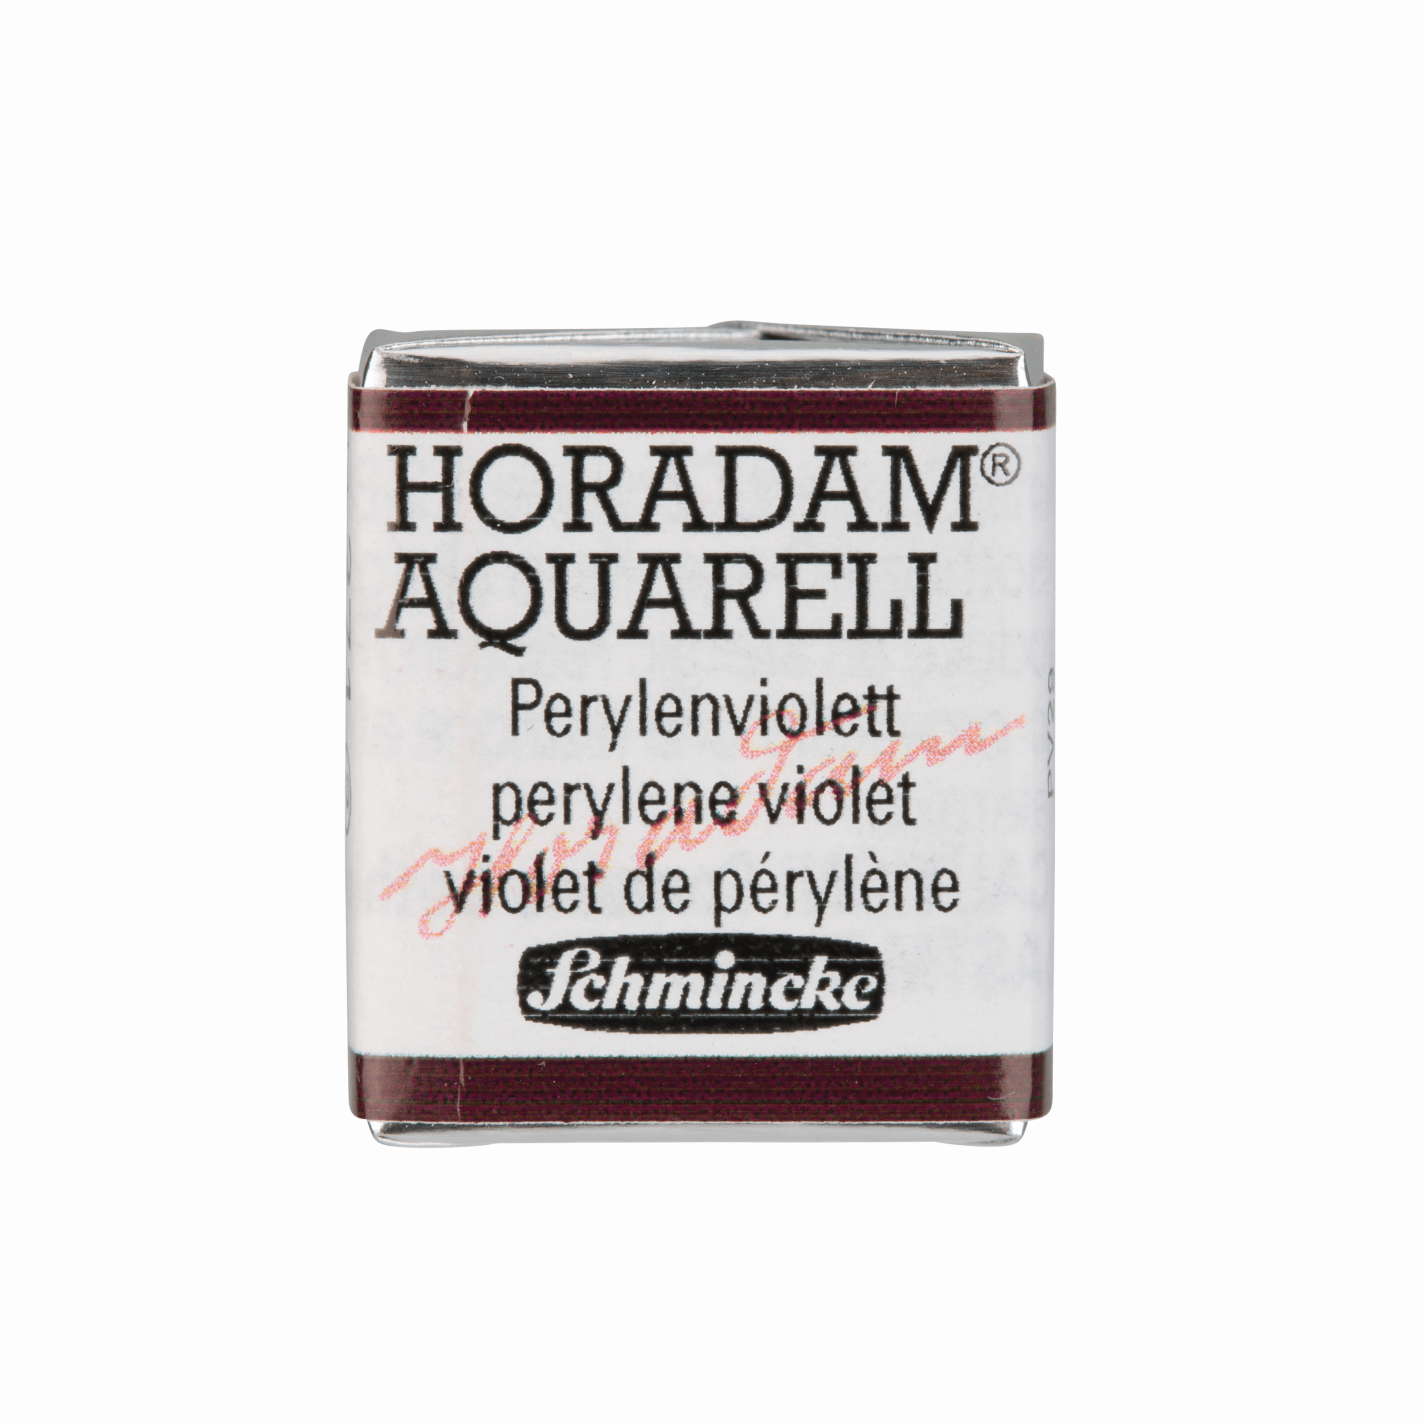 Schmincke Horadam Aquarell pans 1/2 pan Perylene Violet